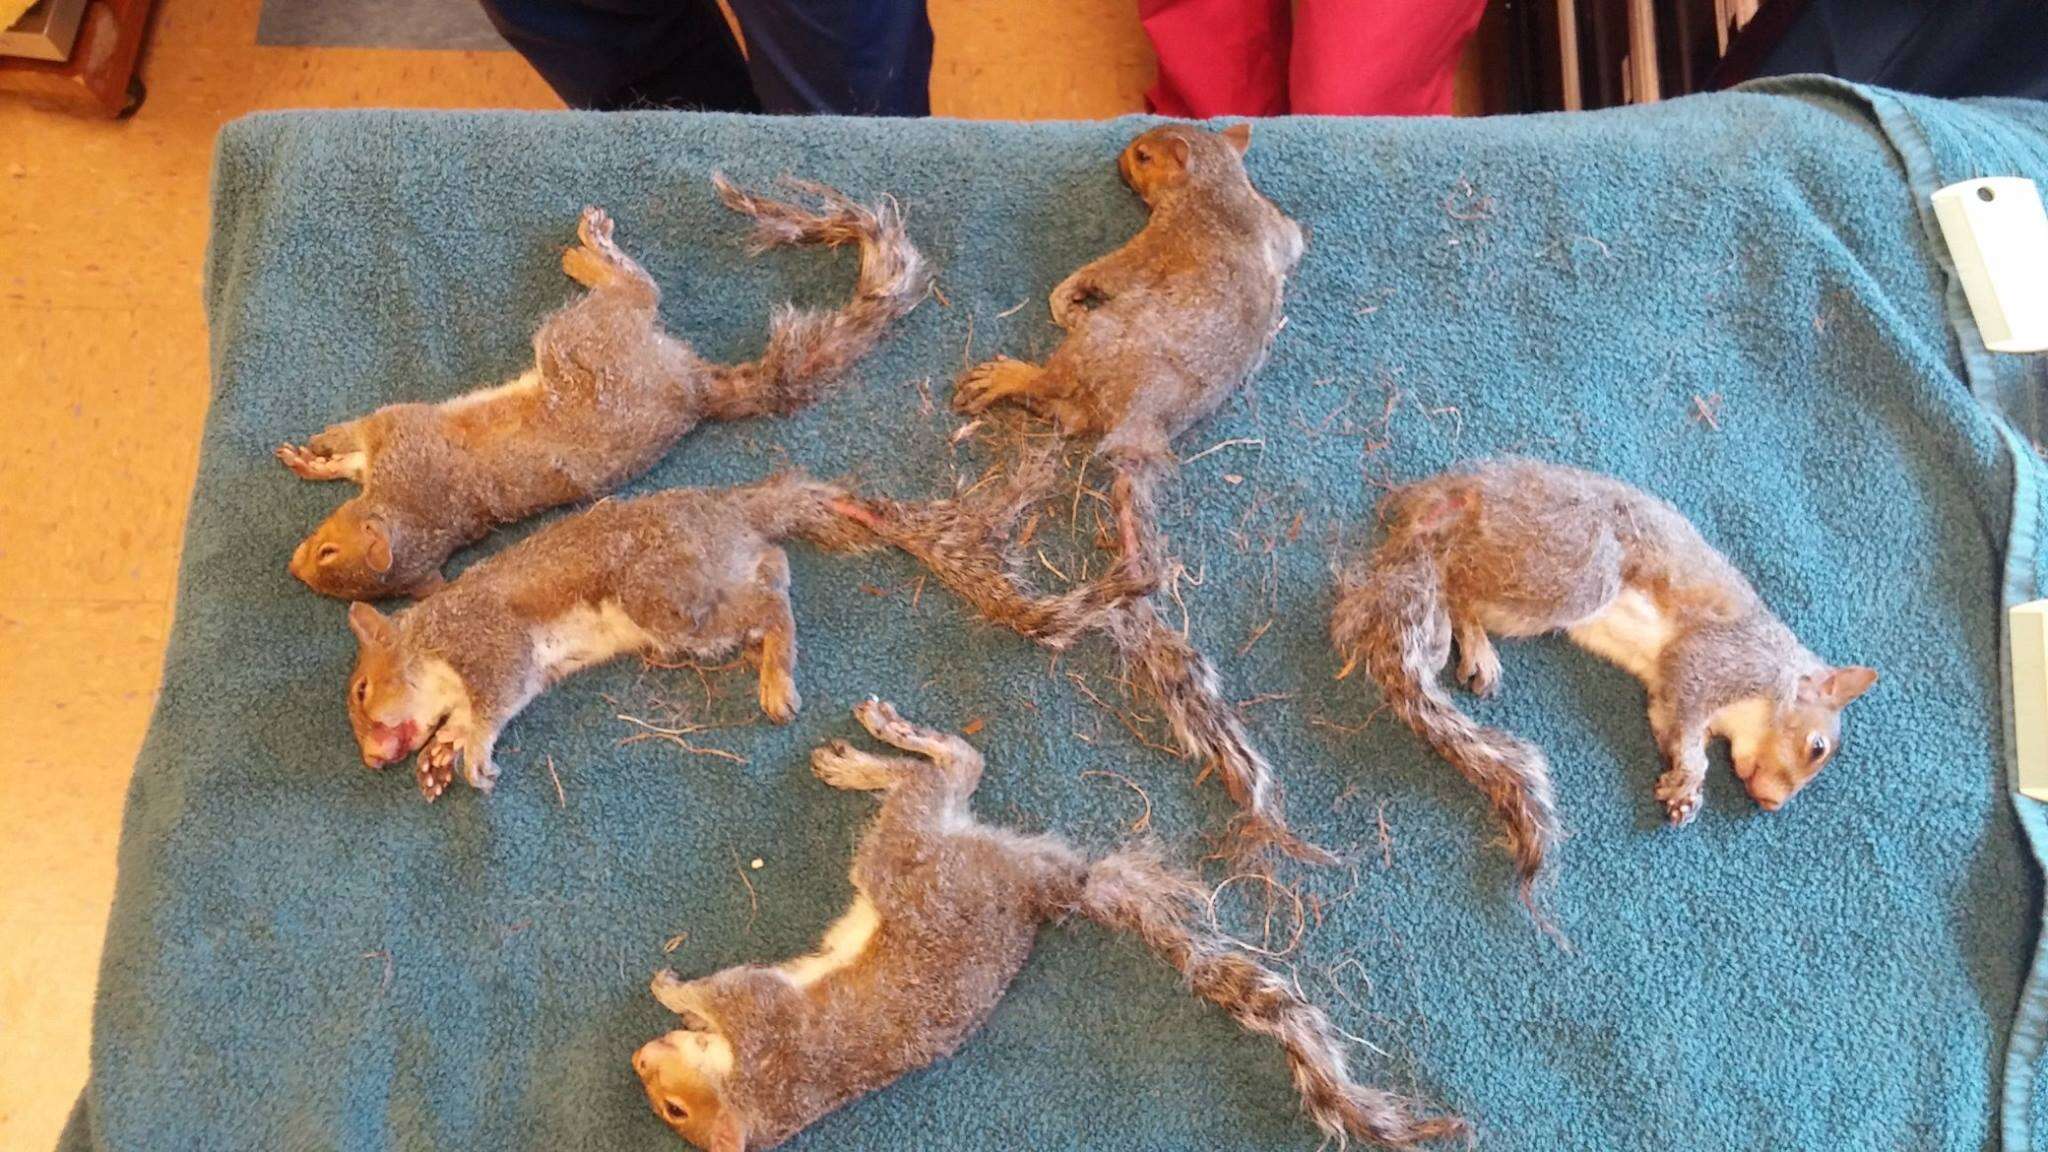 five squirrel tails were untangled